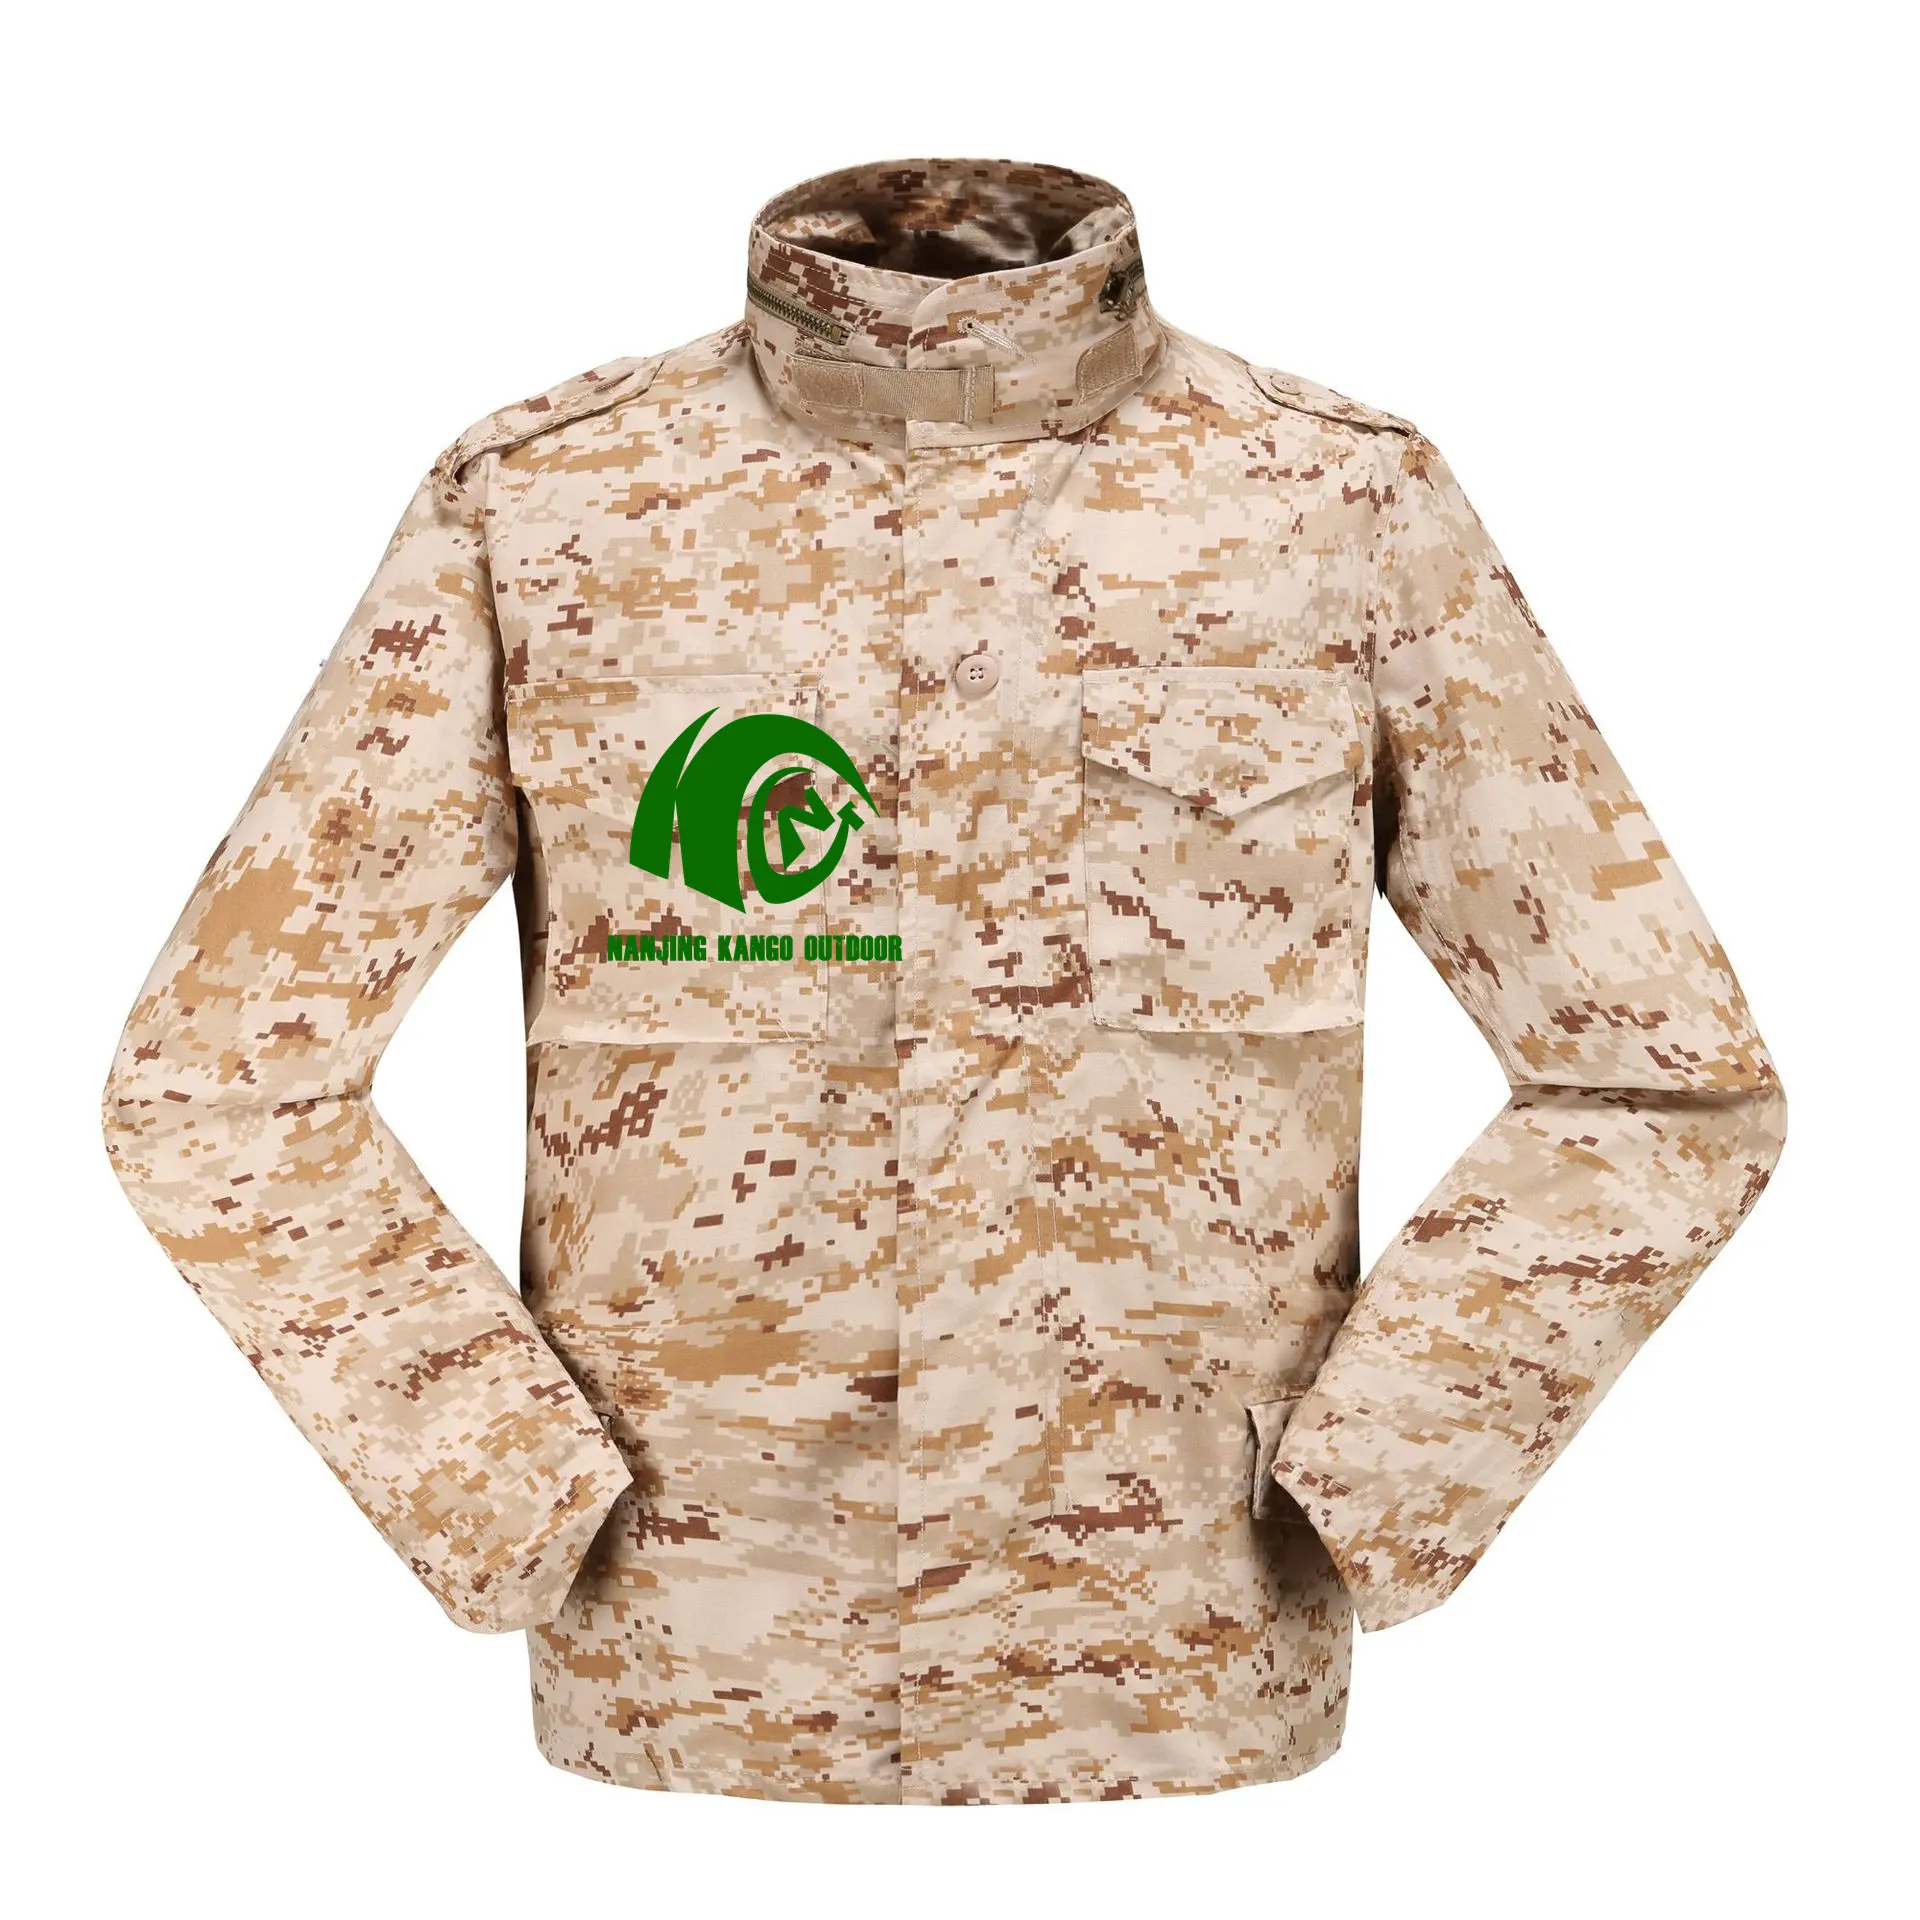 Kango M65 tactical jacket for men water repellent training coat with inner